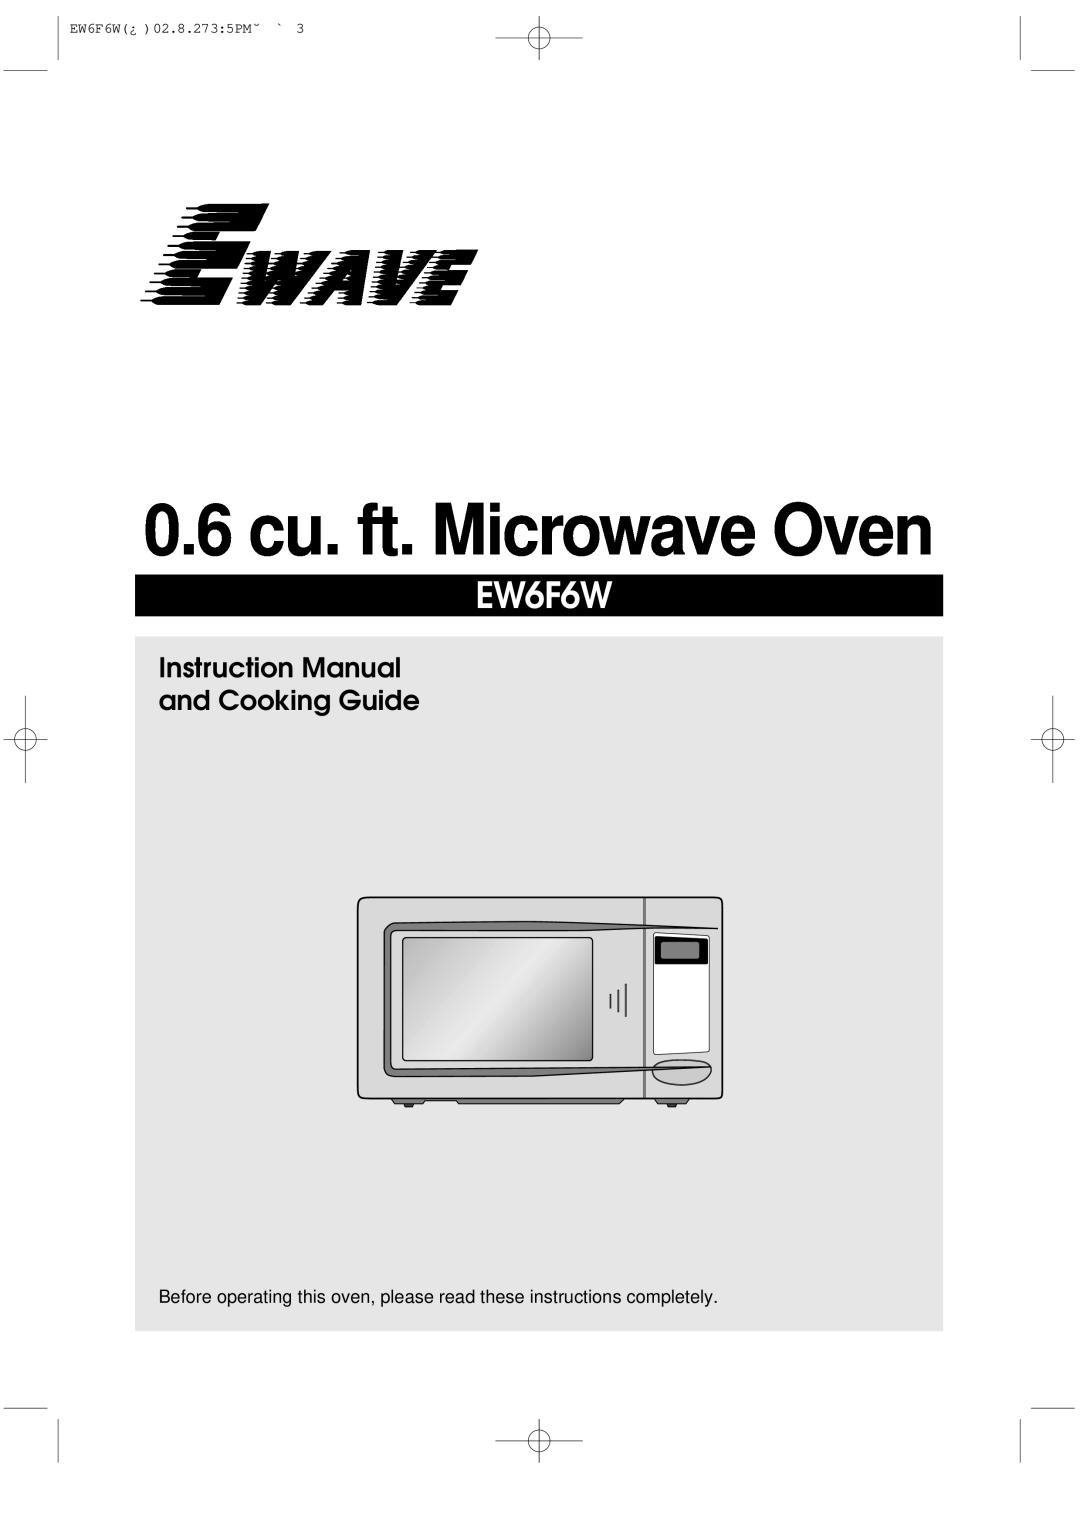 Daewoo instruction manual 0.6 cu. ft. Microwave Oven, EW6F6W¿ 02.8.273 5PM˘ ` 